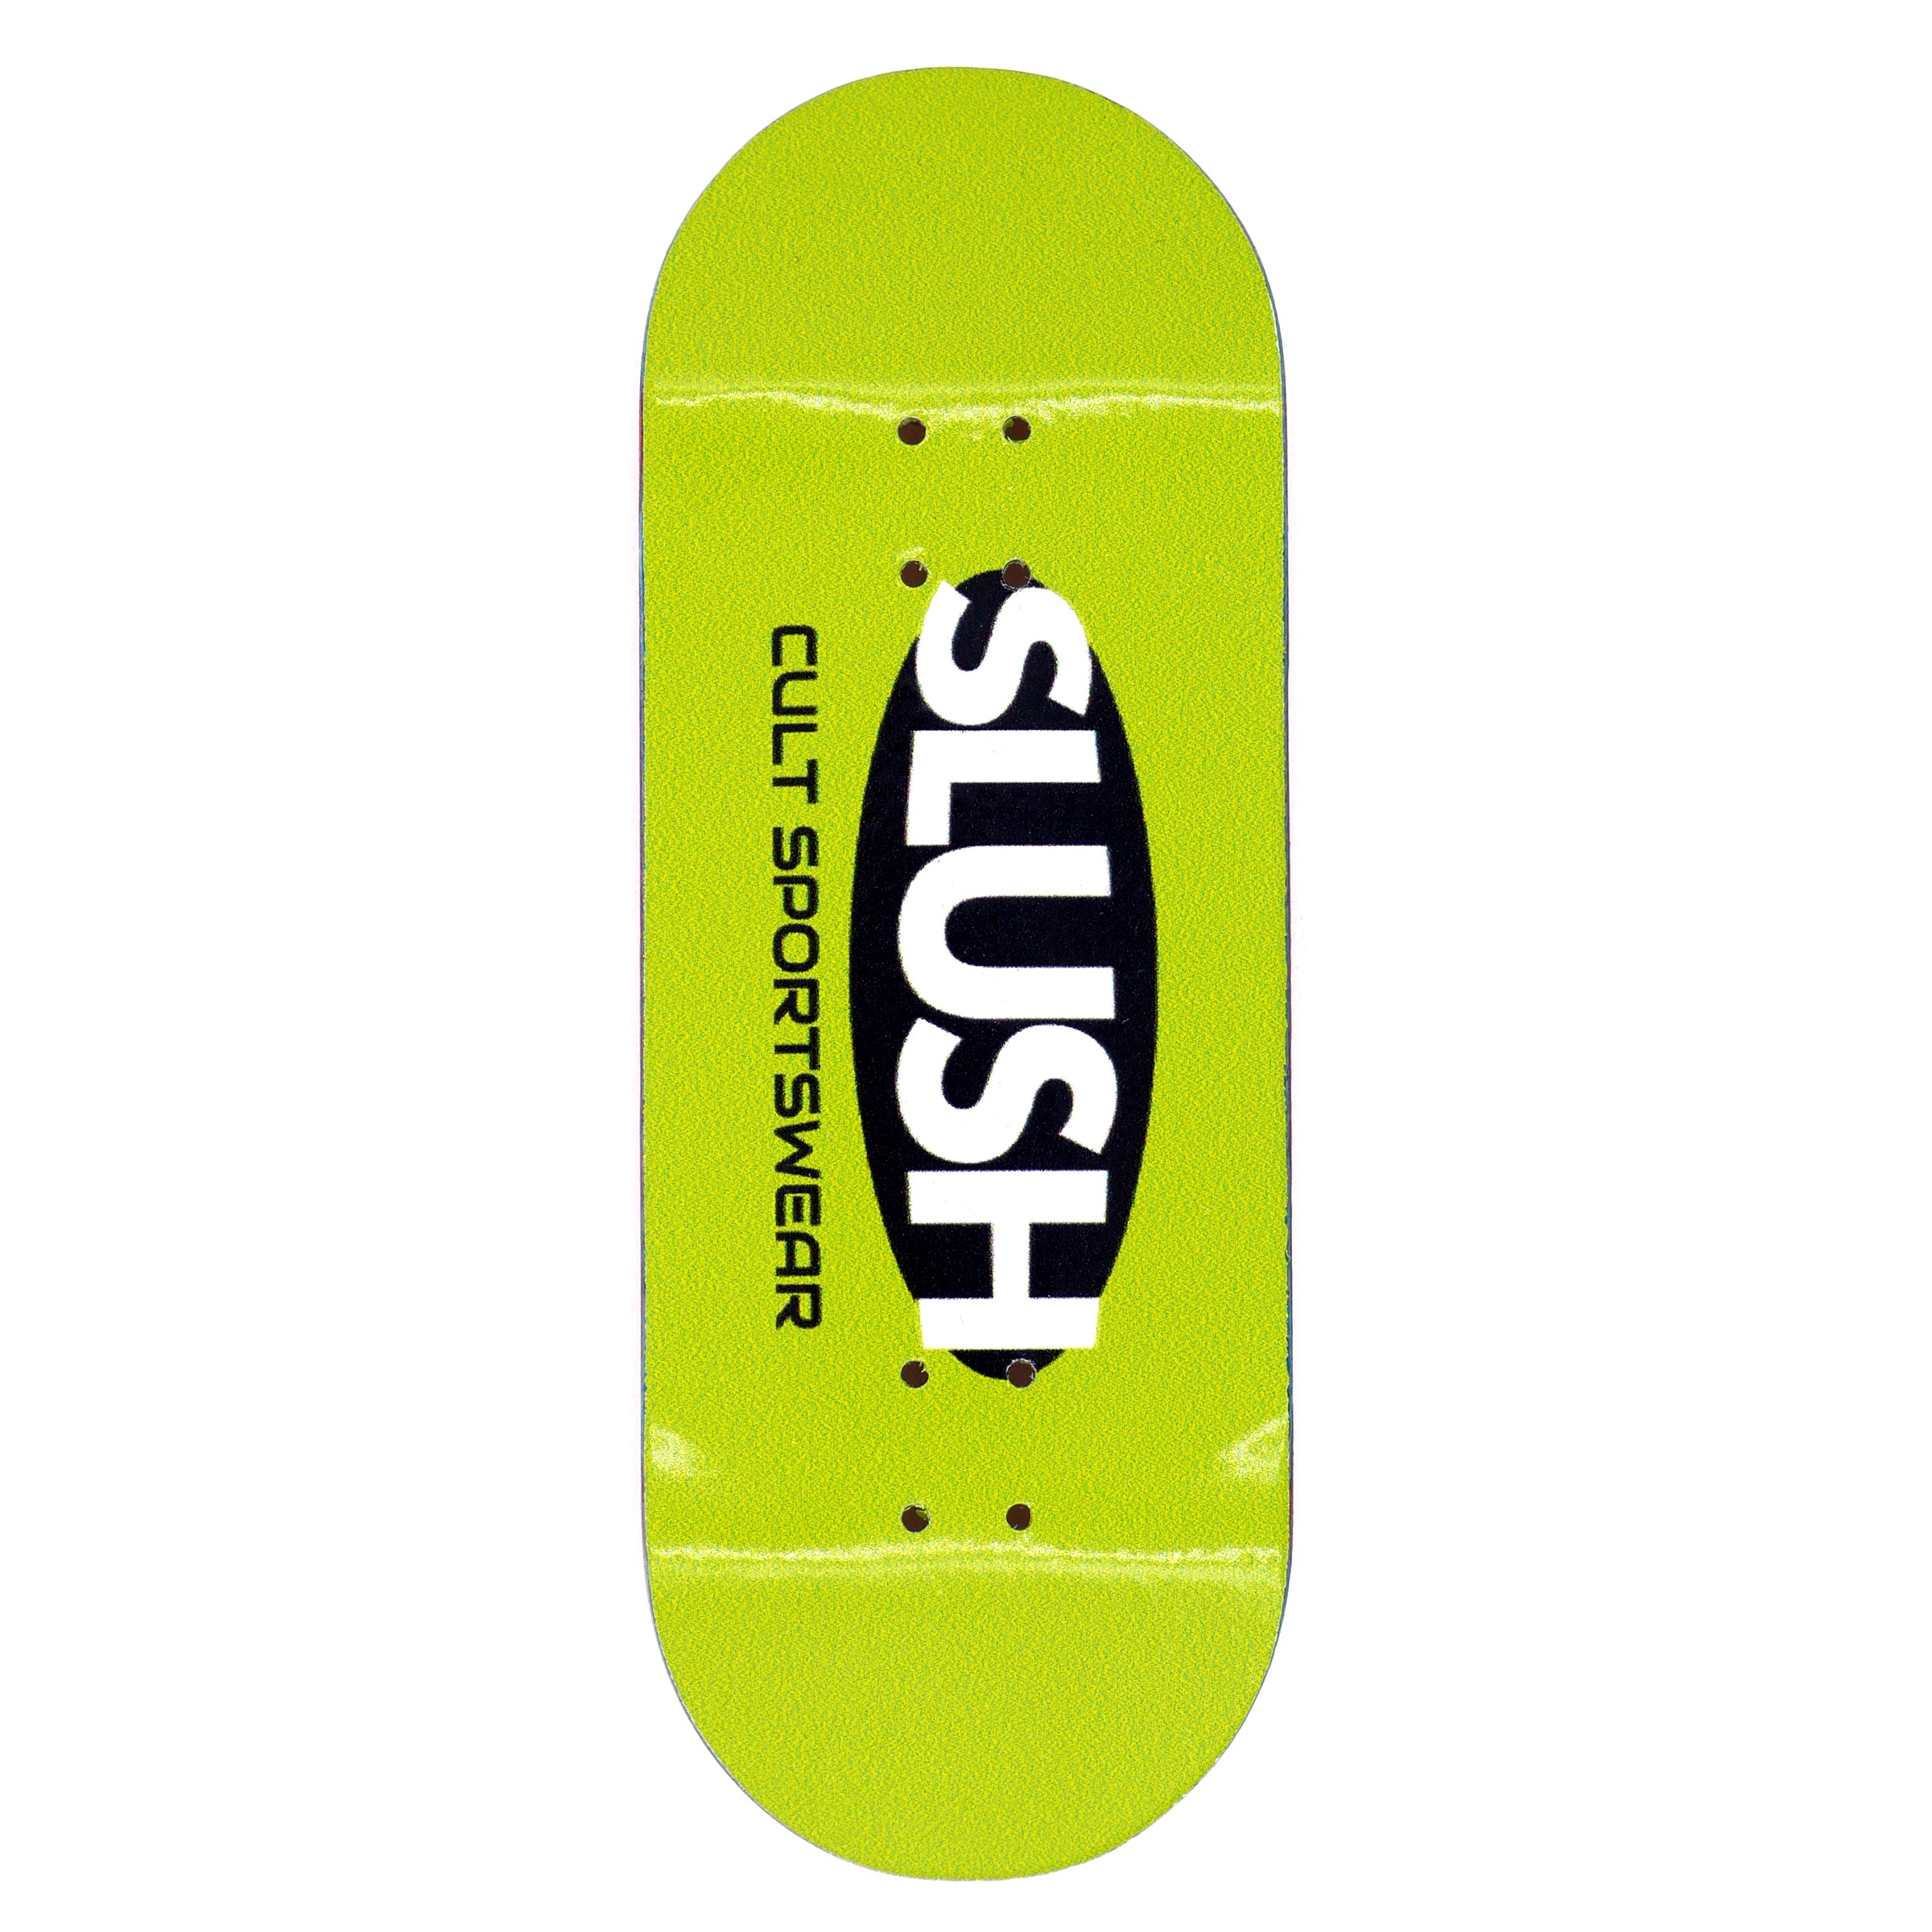 Slushcult "Slush Sport" Pro Fingerboard Deck MINI Skate Shop Slushcult    Slushcult